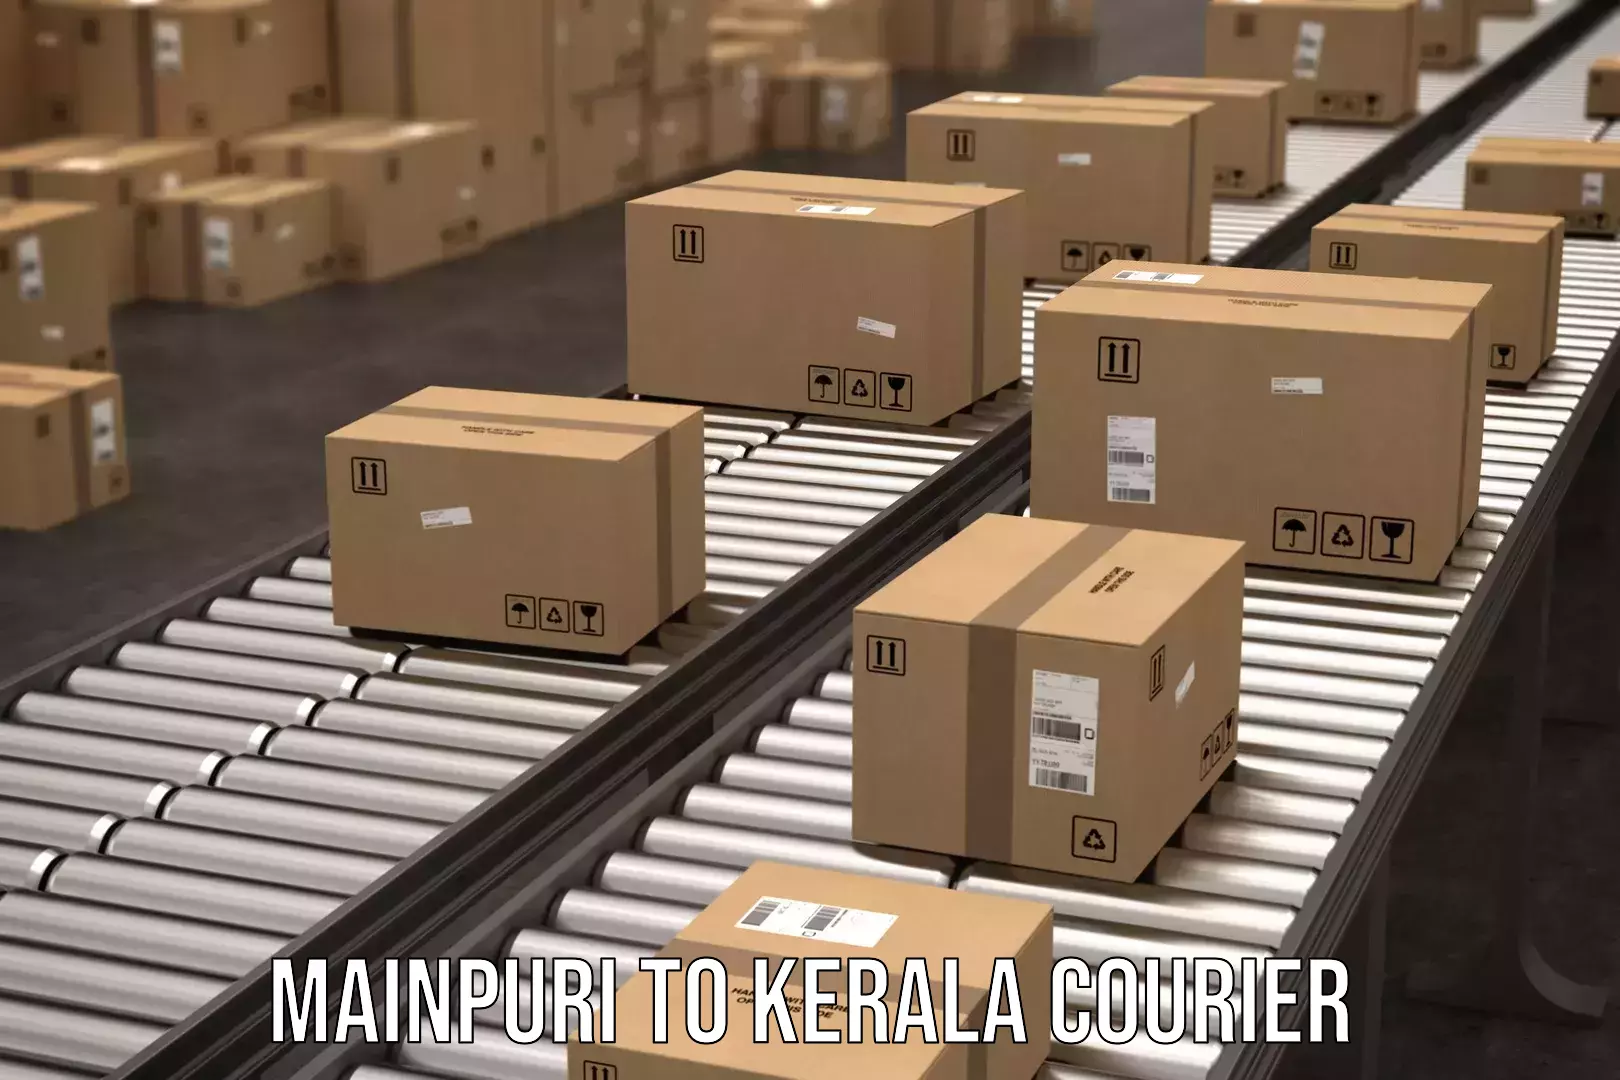 Digital courier platforms Mainpuri to Kerala